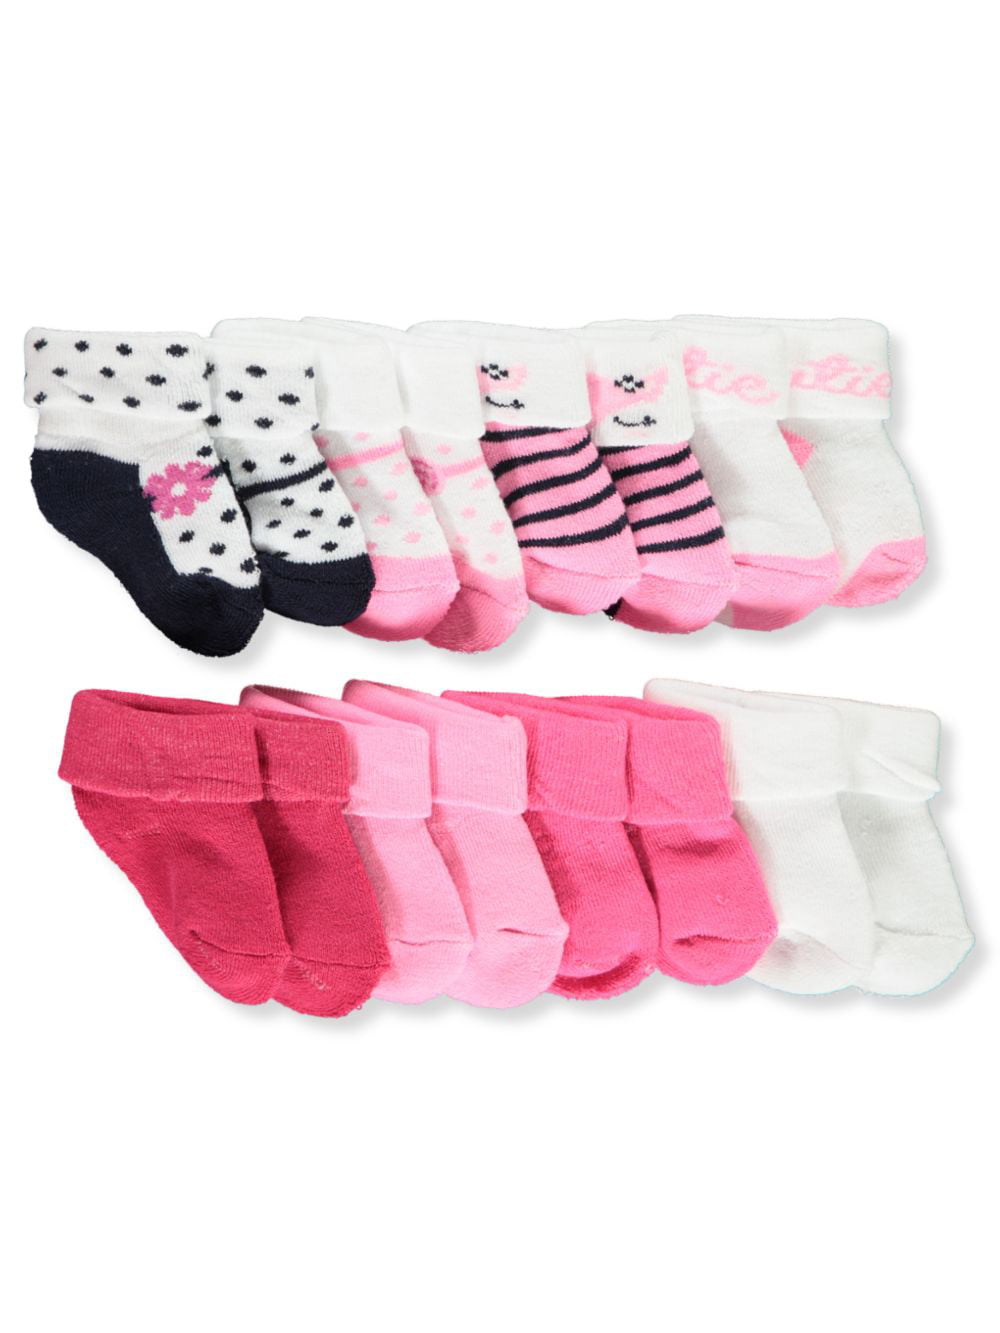 Babysock Cartoon Socks Baby Socks Cartoonsock Cotton Girlssock Slip-resistant P3 